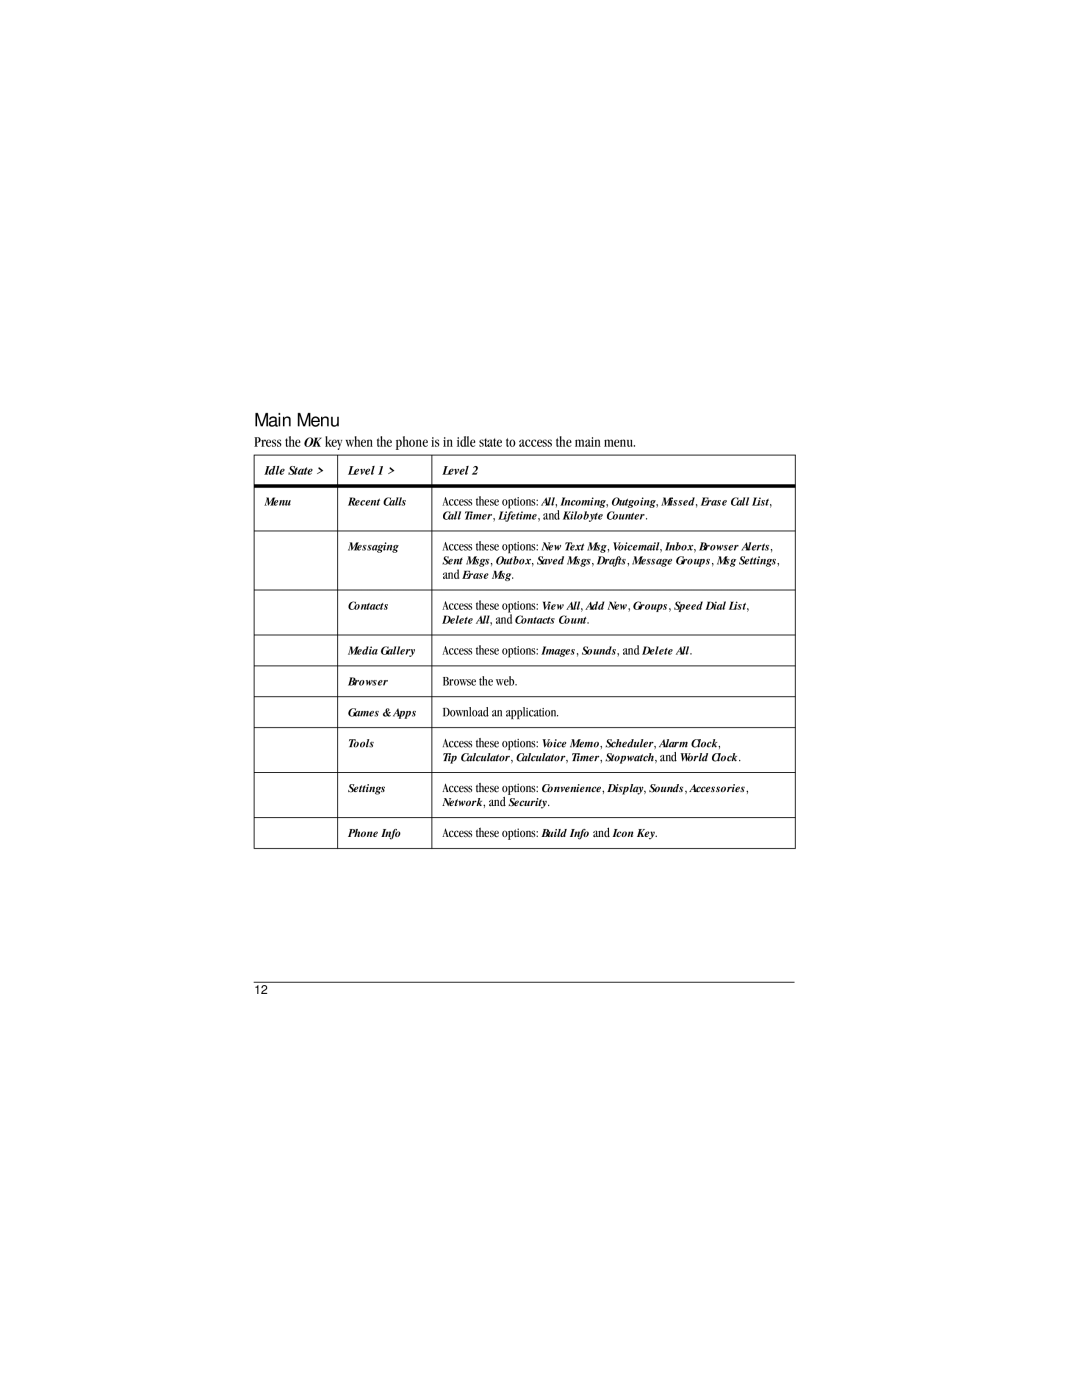 Kyocera S1300 manual Main Menu, Idle State Level 